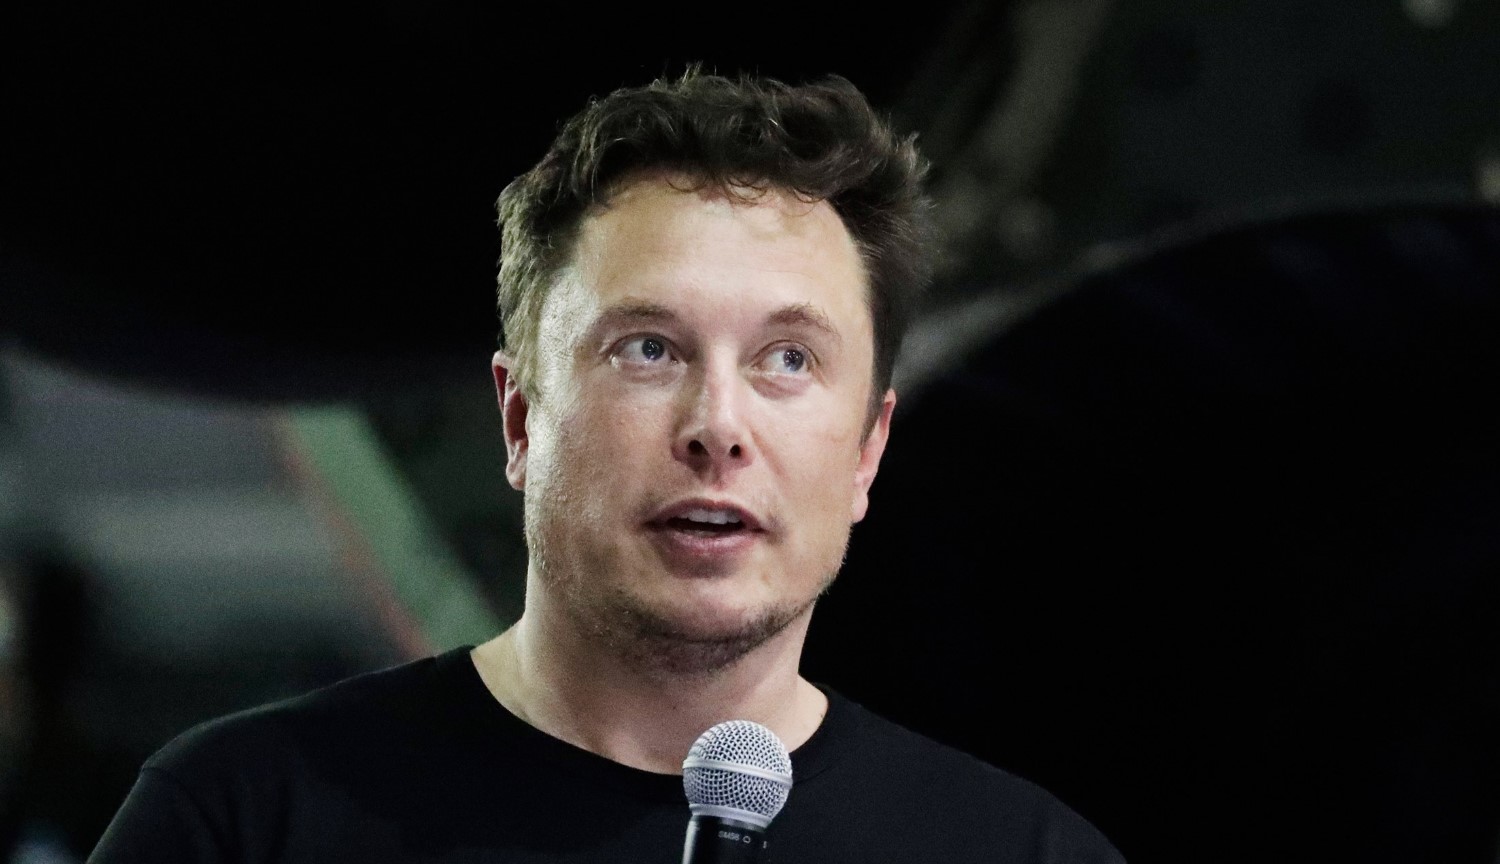 What novelty will represent Elon Musk on Thursday?